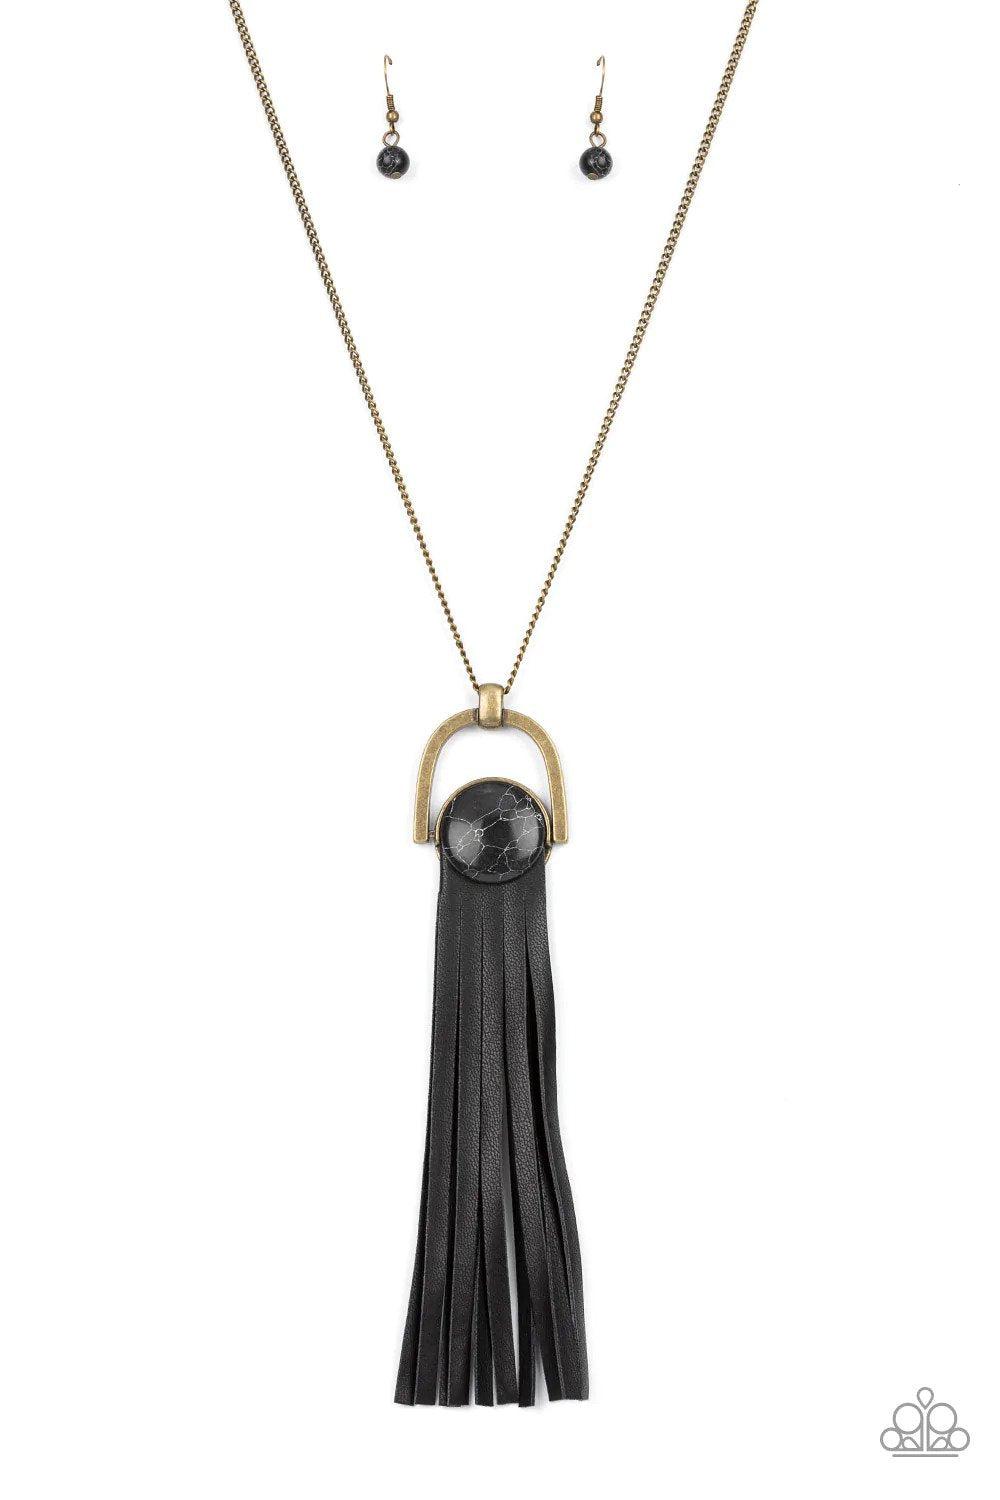 Winslow Wanderer Brass Necklace - Paparazzi Accessories- lightbox - CarasShop.com - $5 Jewelry by Cara Jewels